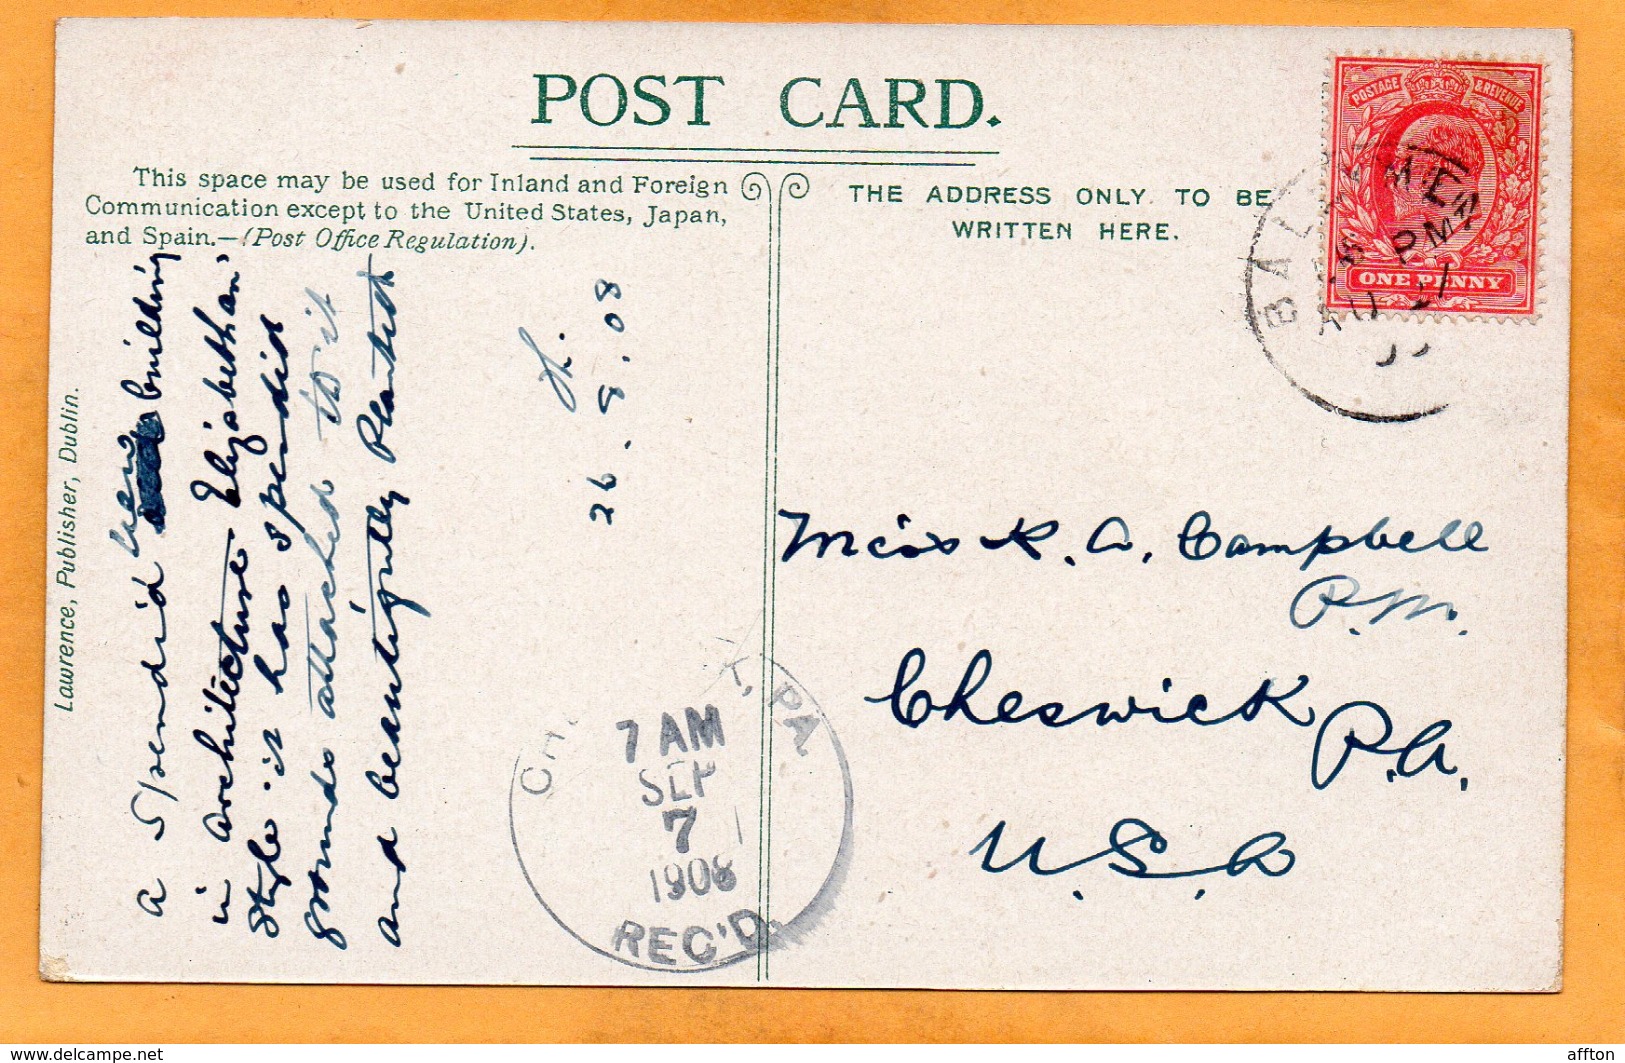 Bangor Co Down 1908 Postcard Mailed - Down